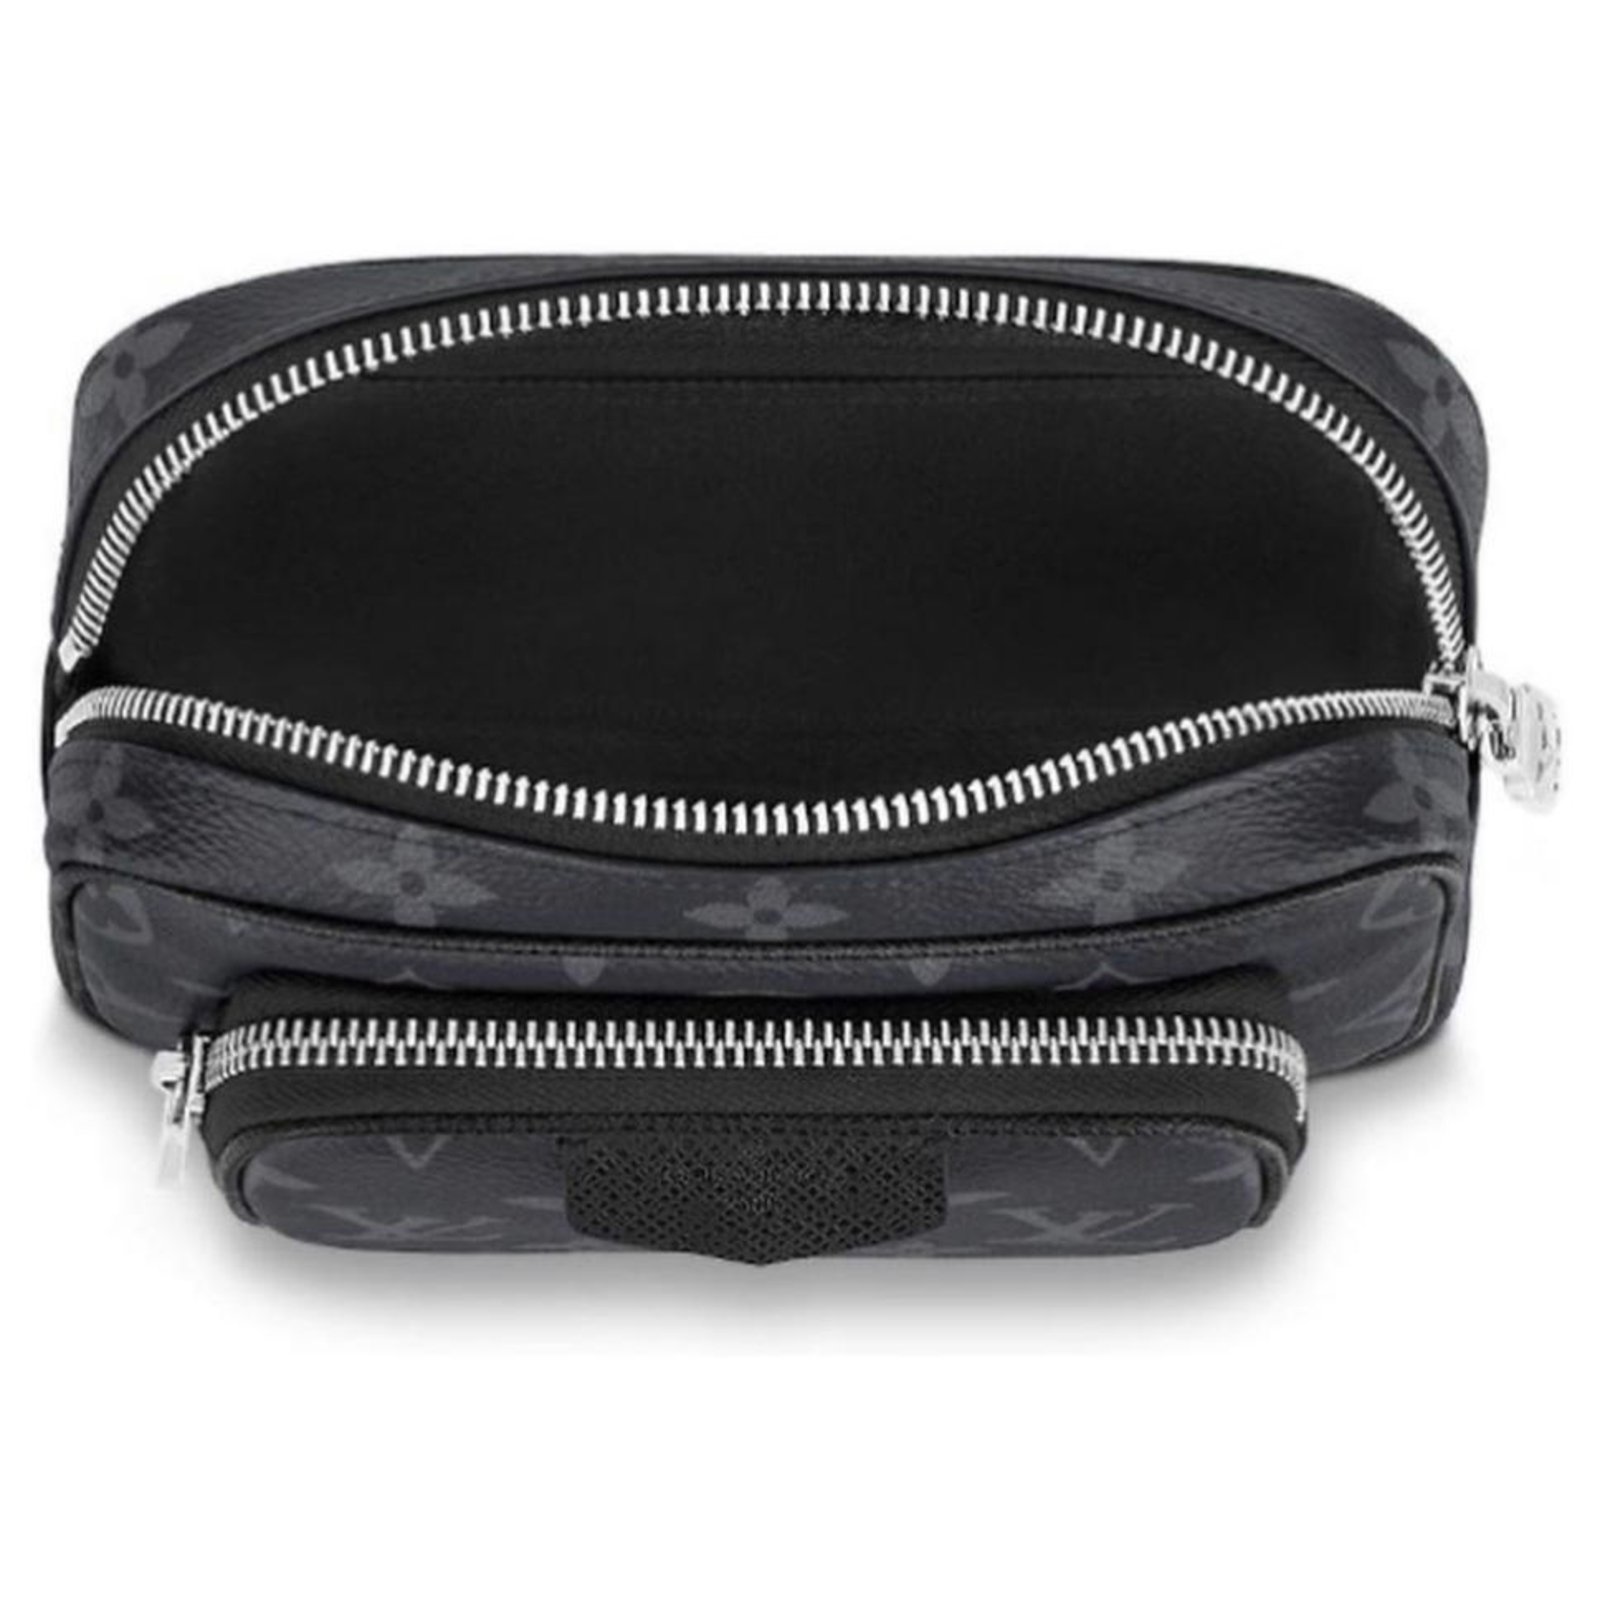 Bags Briefcases Louis Vuitton LV Outdoor Pouch